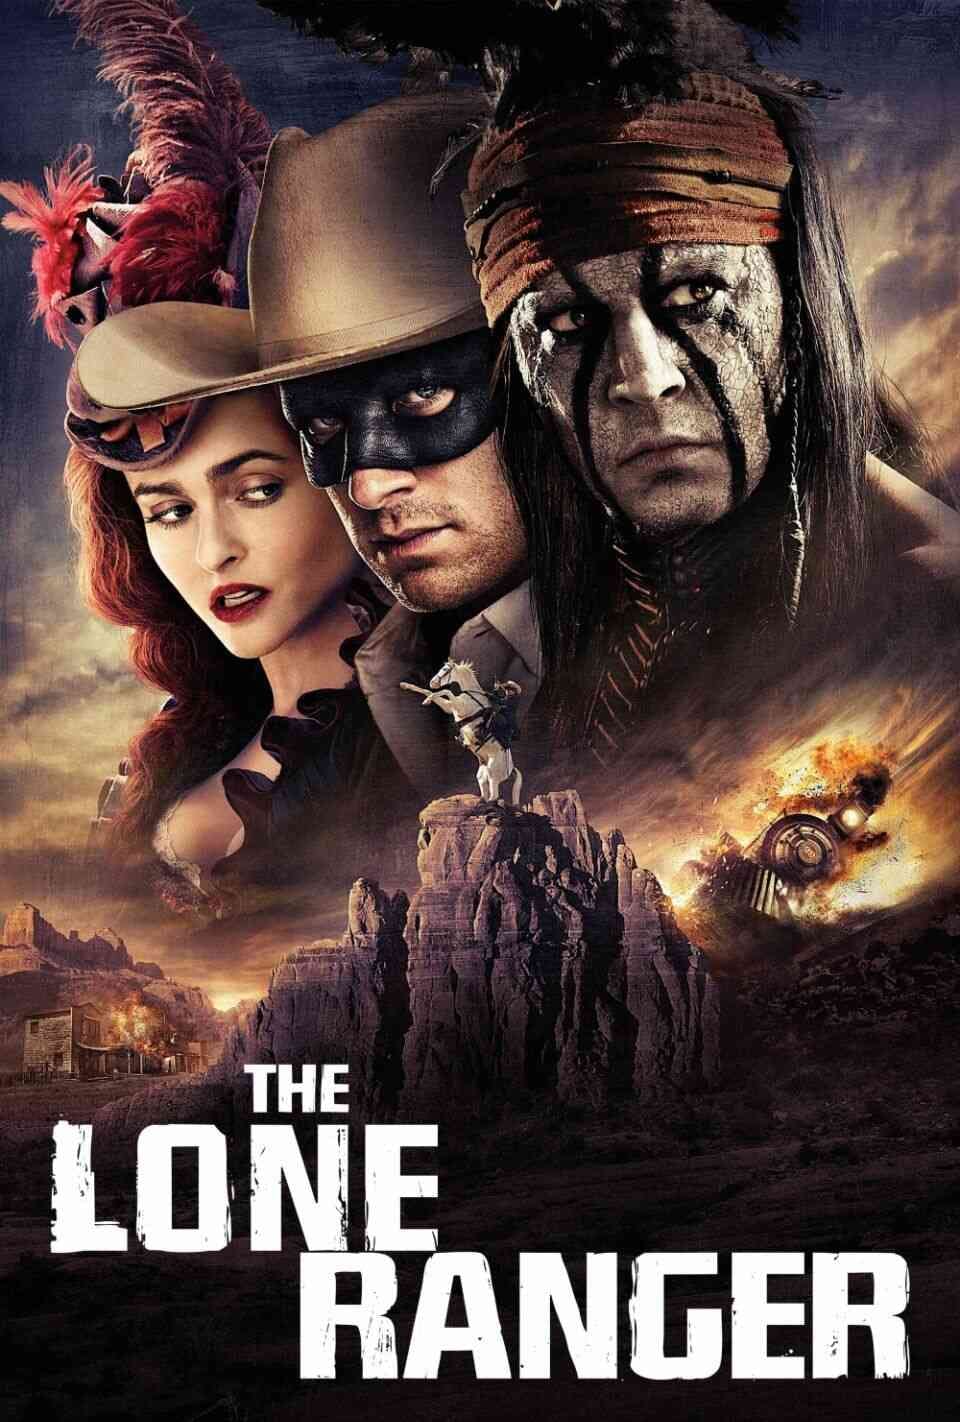 Read The Lone Ranger screenplay.